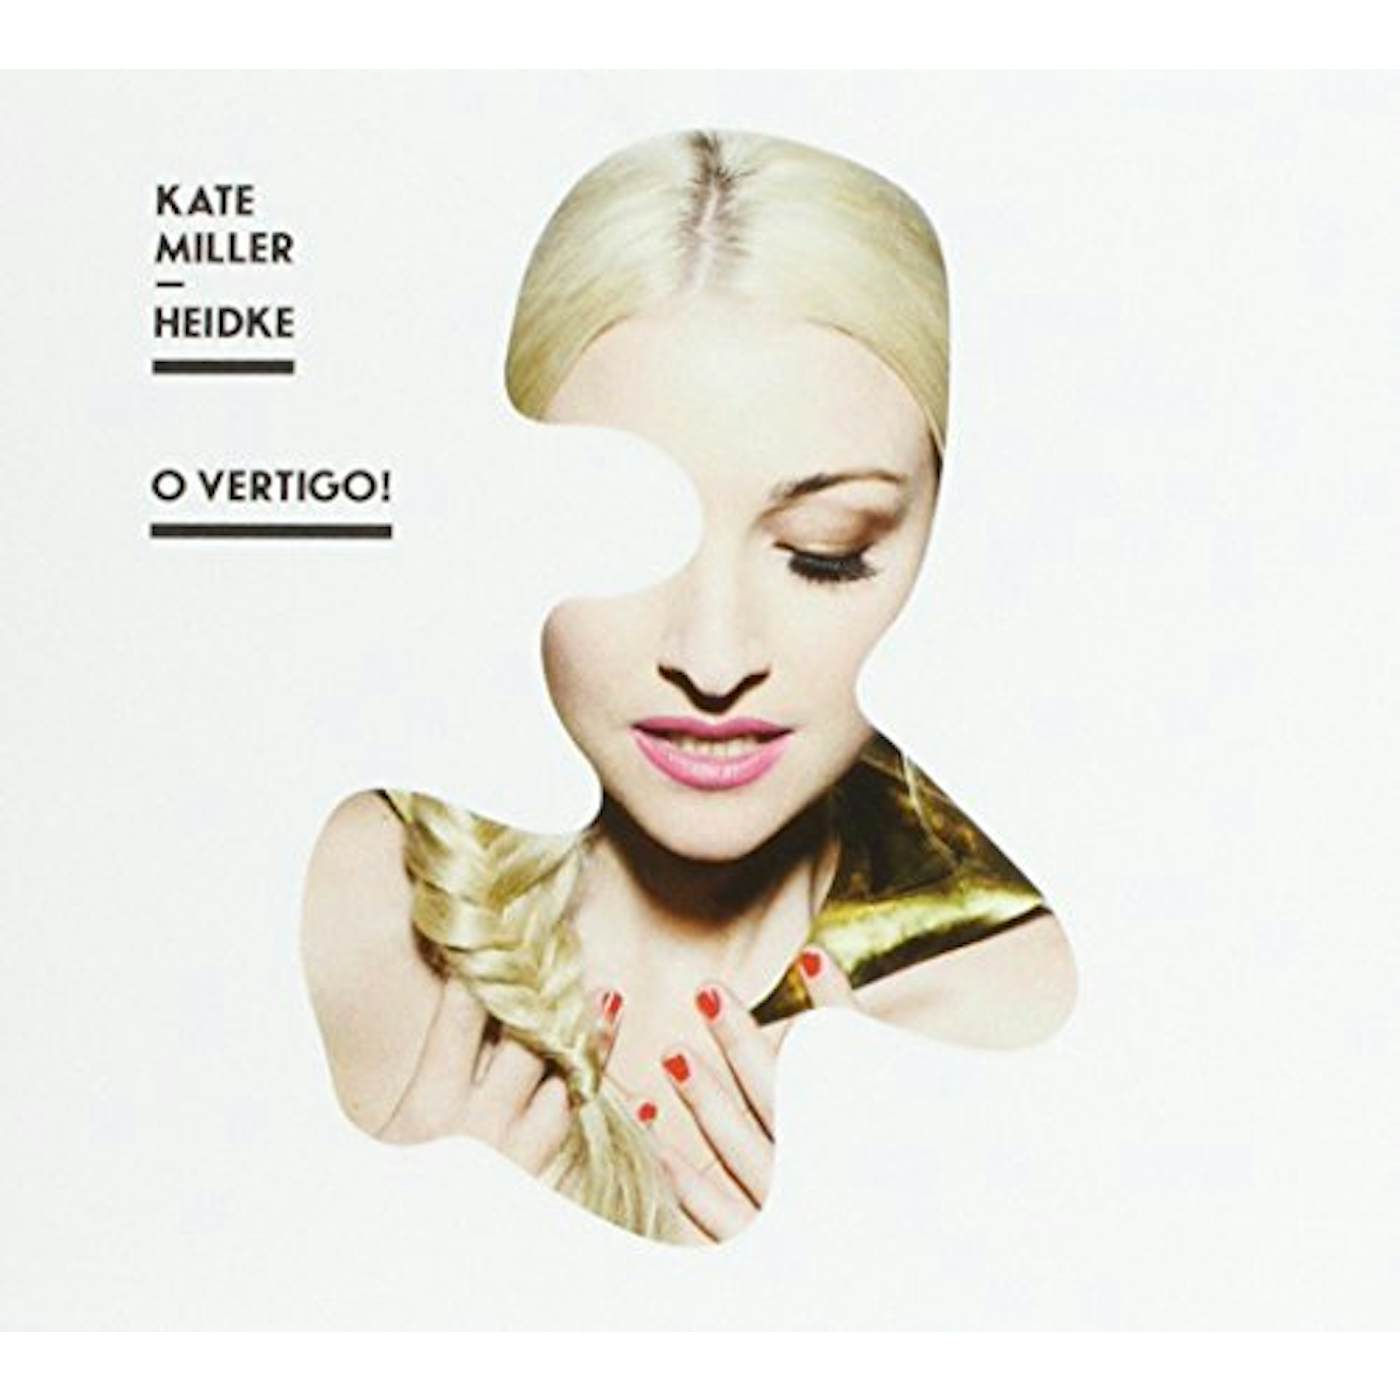 Kate Miller-Heidke O VERTIGO! CD